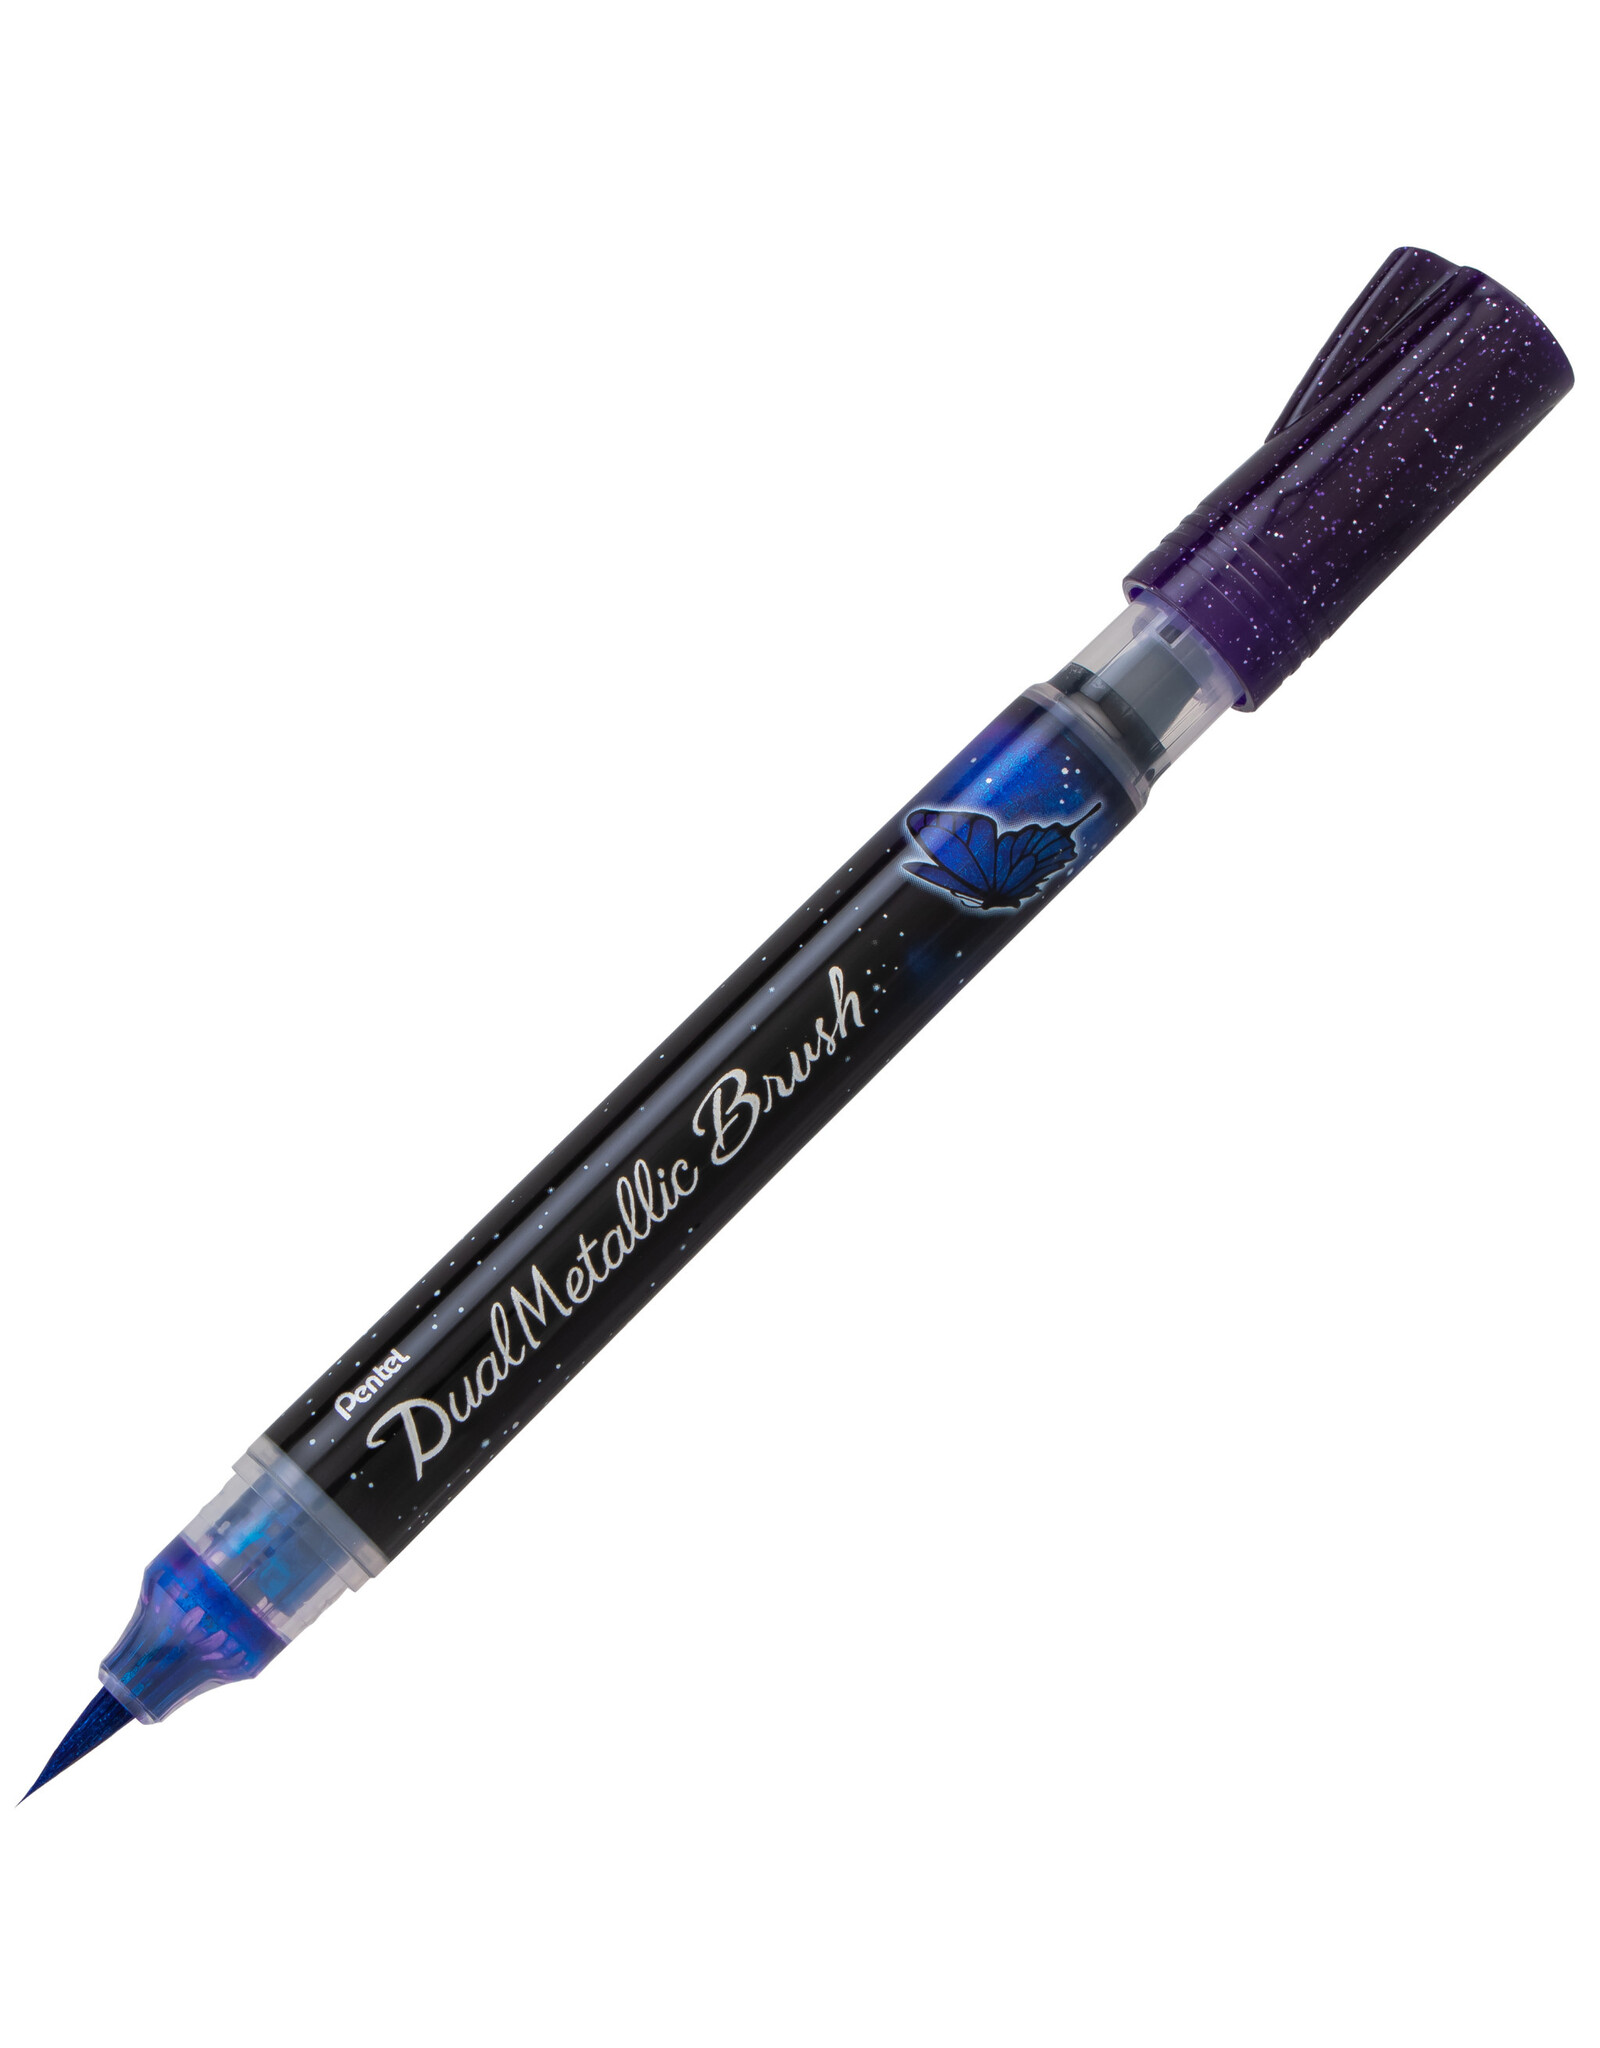 Pentel Pentel Arts DualMetallic Brush Pen, Violet/Metallic Blue